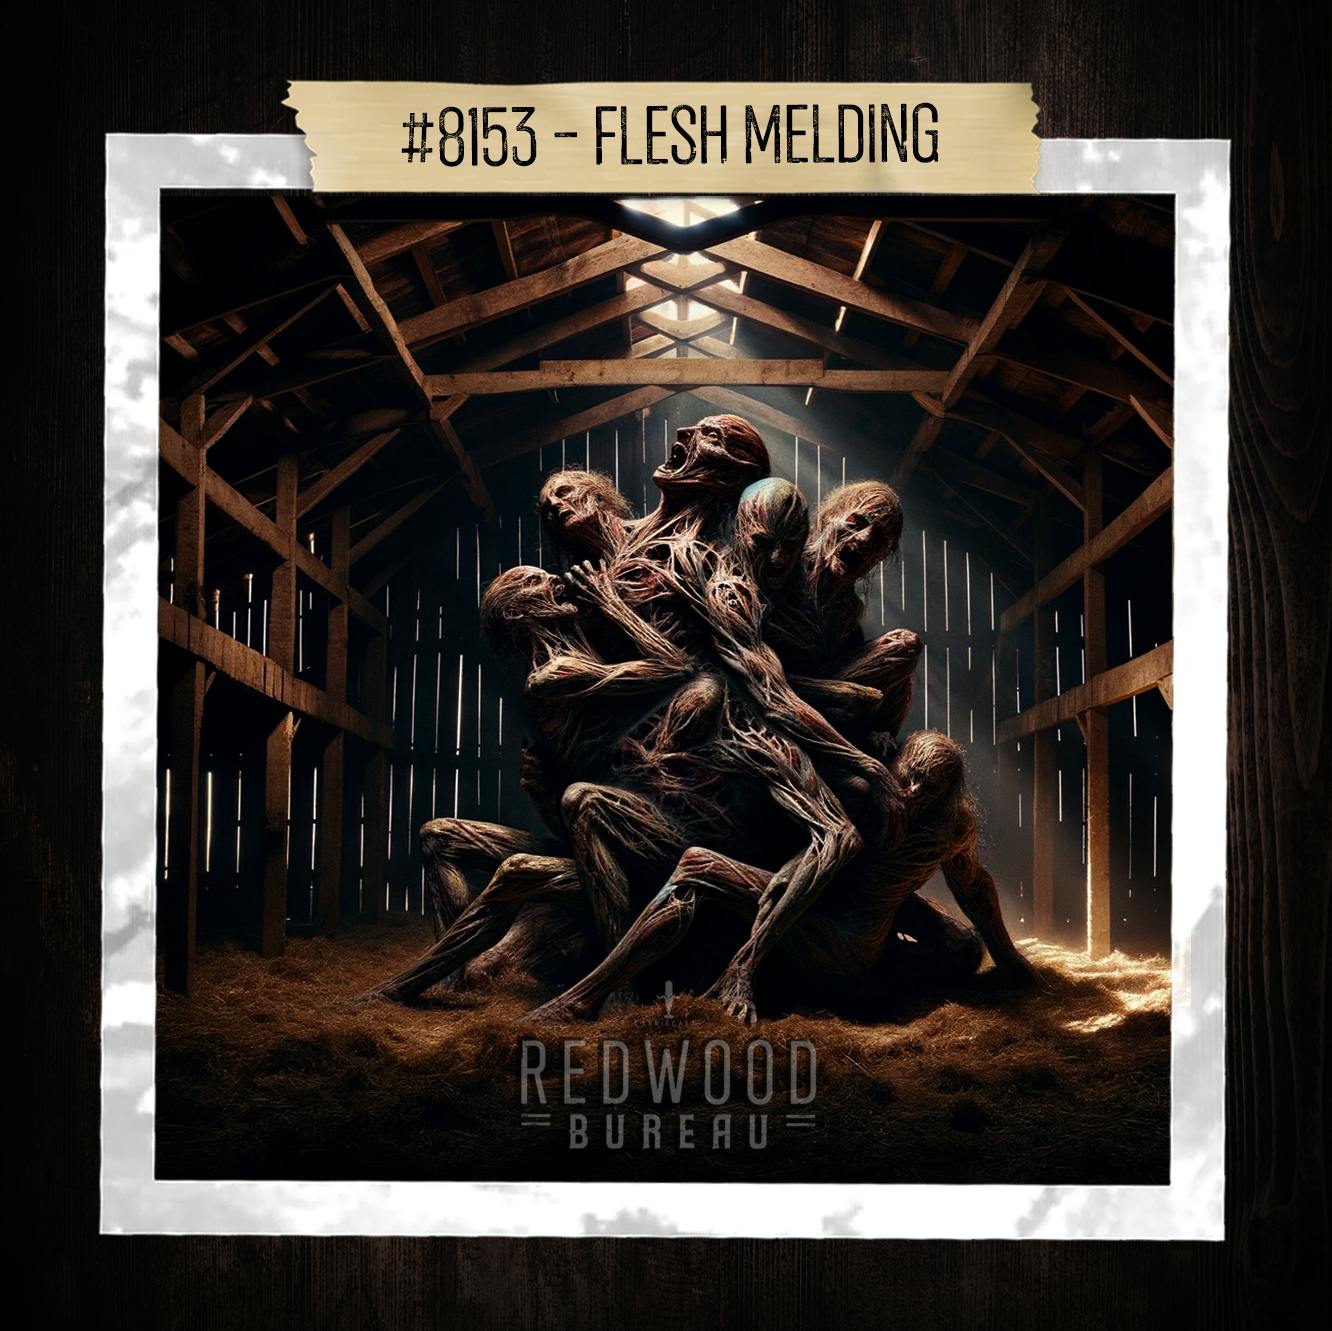 "FLESH MELDING" - Redwood Bureau Phenomenon #8153